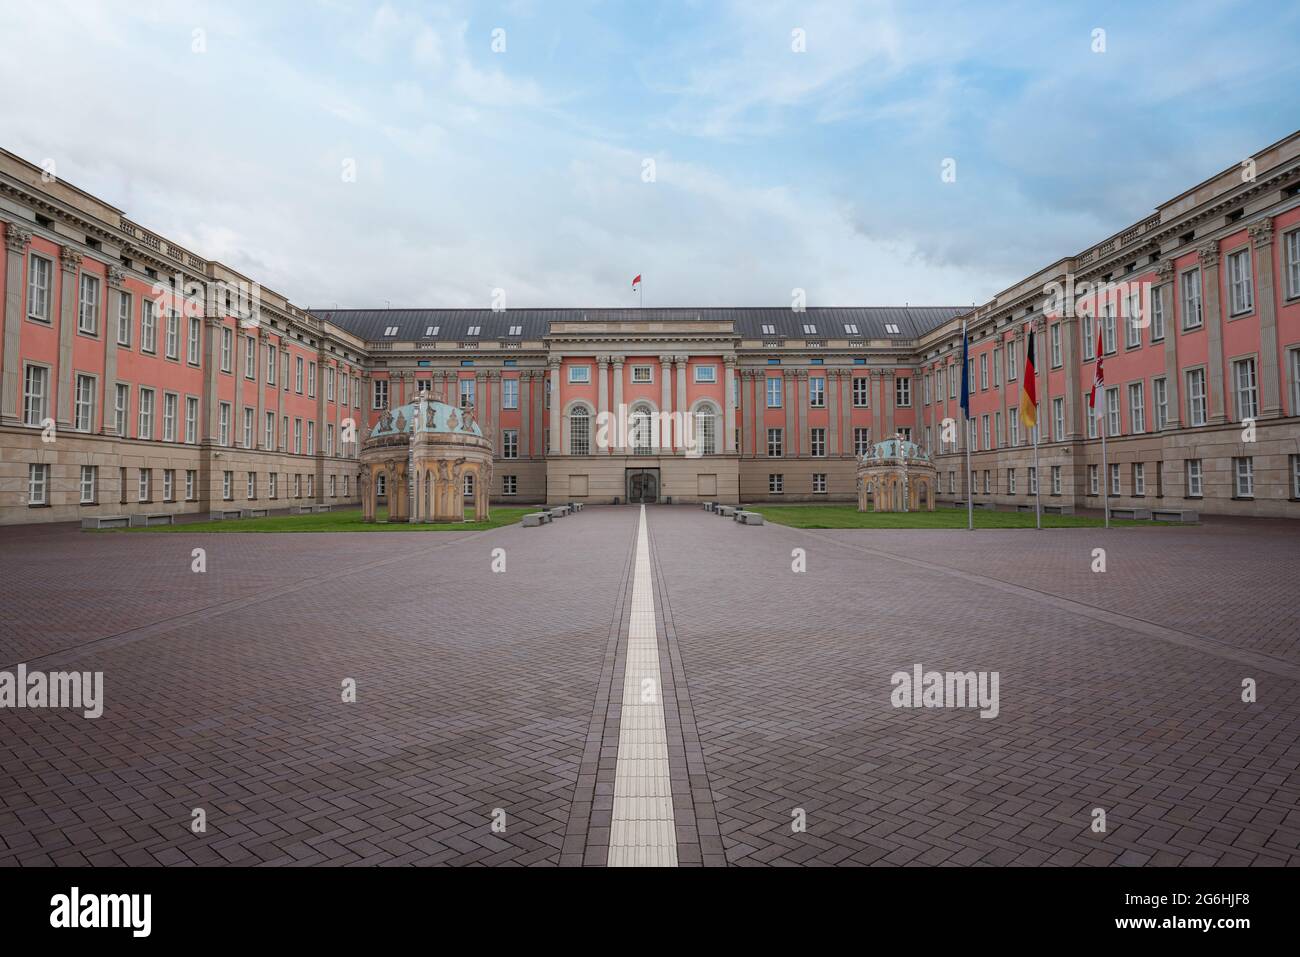 Potsdam City Palace - Landtag of Brandenburg - seat of the parliament of Brandenburg federal state - Potsdam, Germany Stock Photo